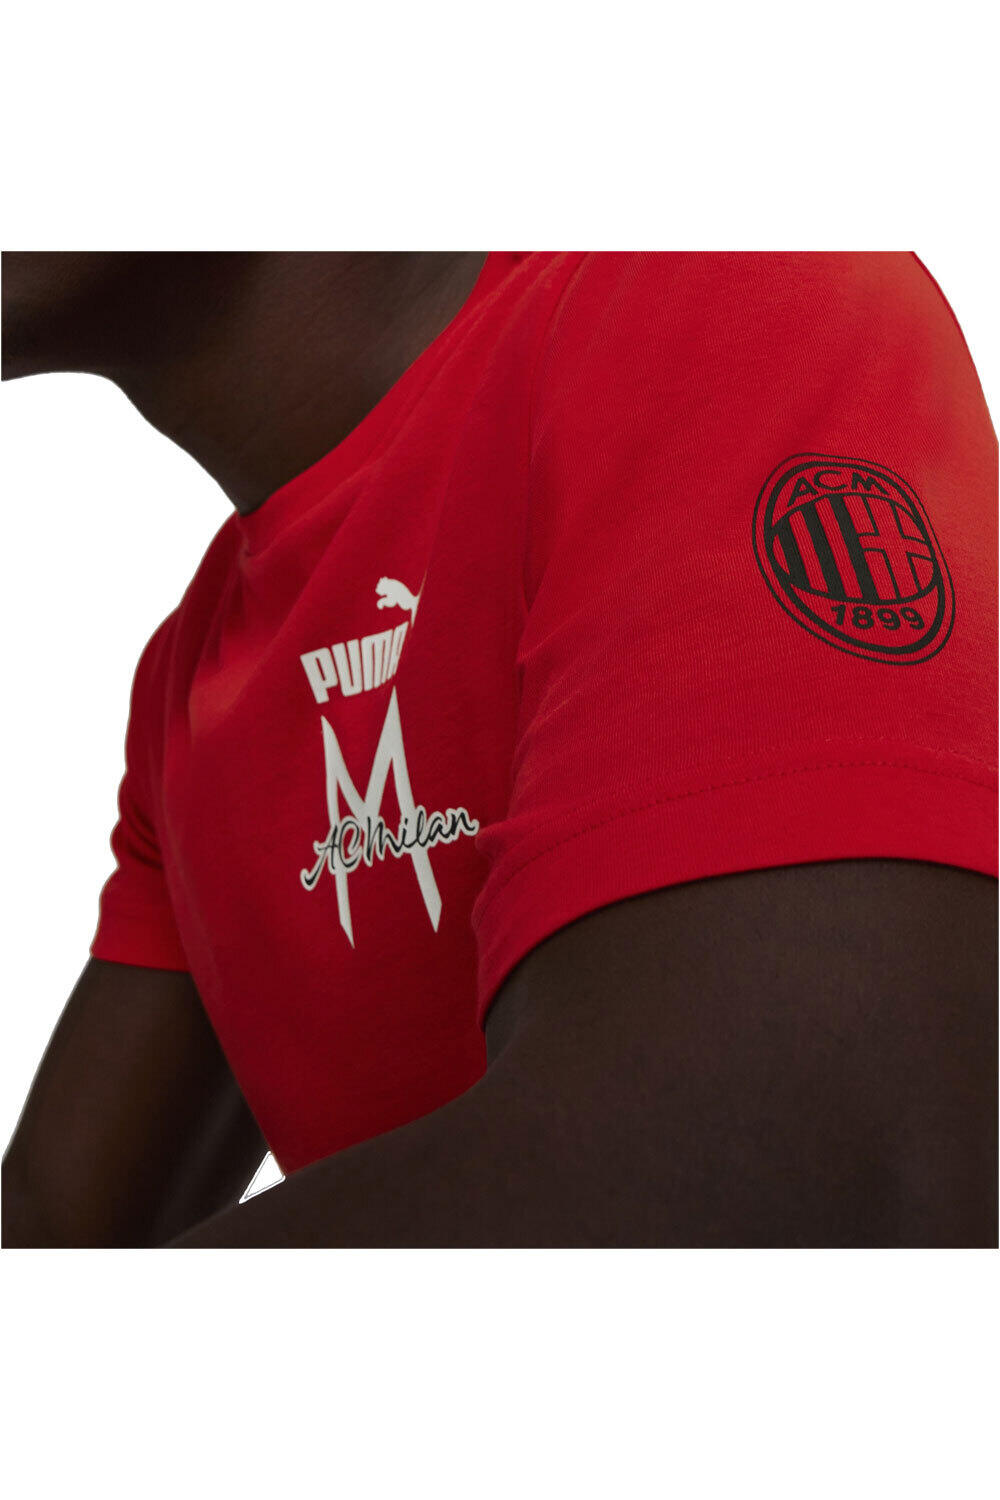 Puma camiseta de fútbol oficiales ACM Ftblicons Tee vista detalle